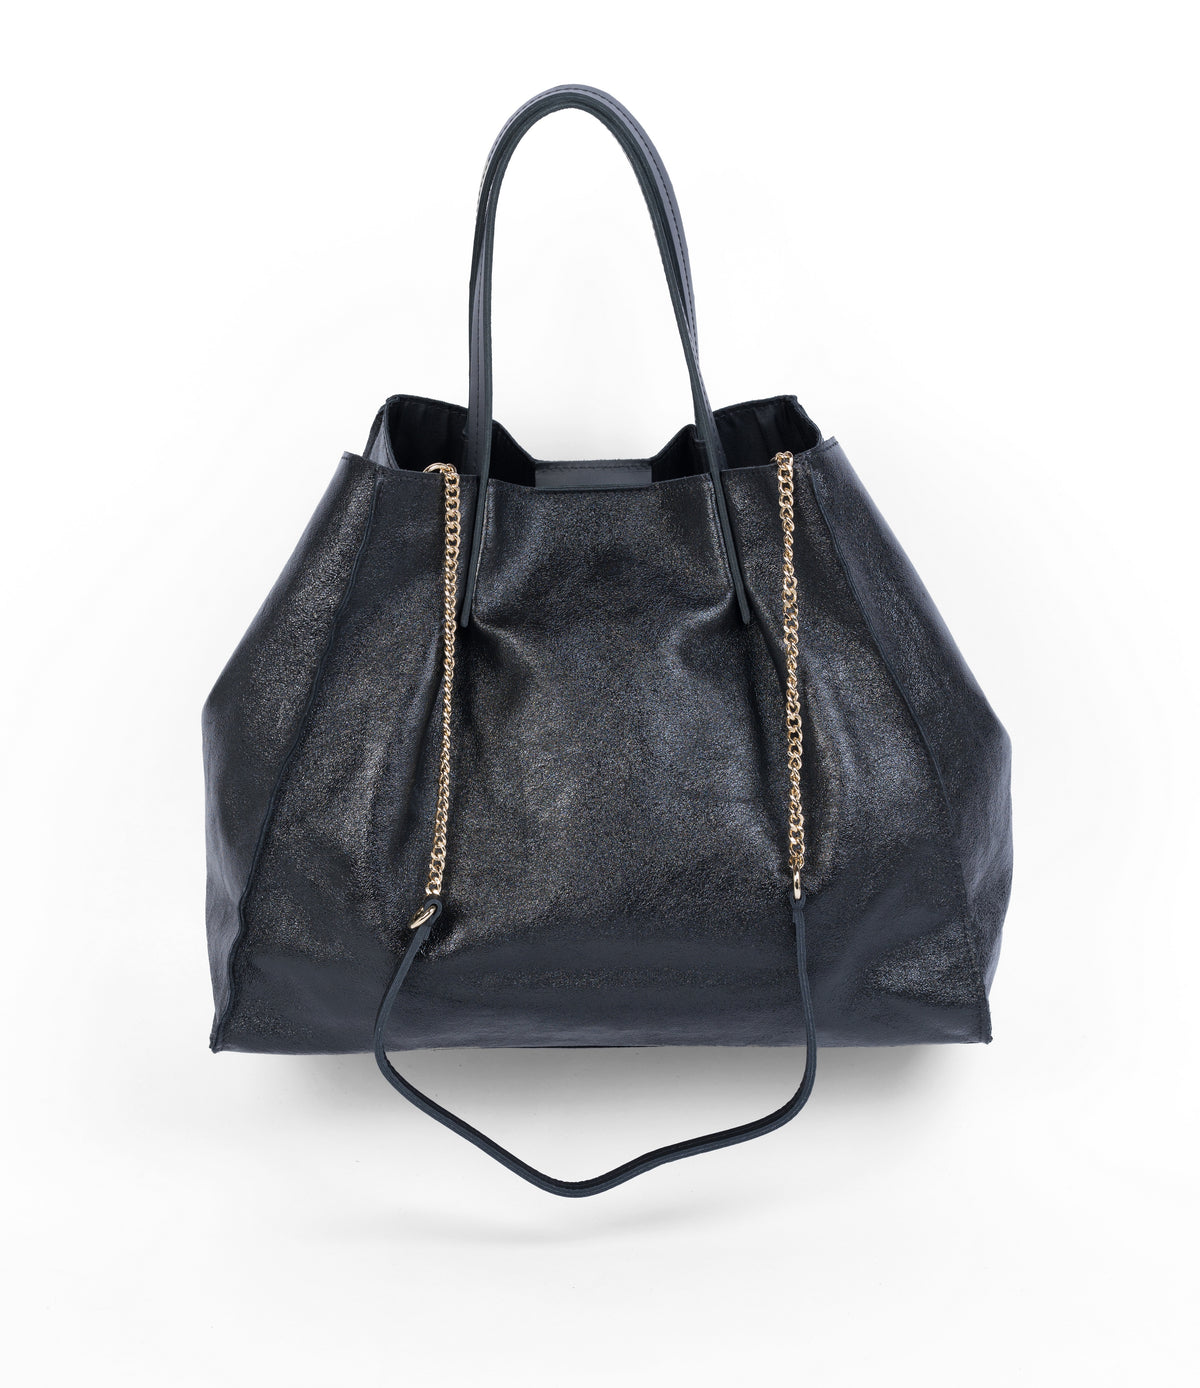 Shimmer leather Italian handbag